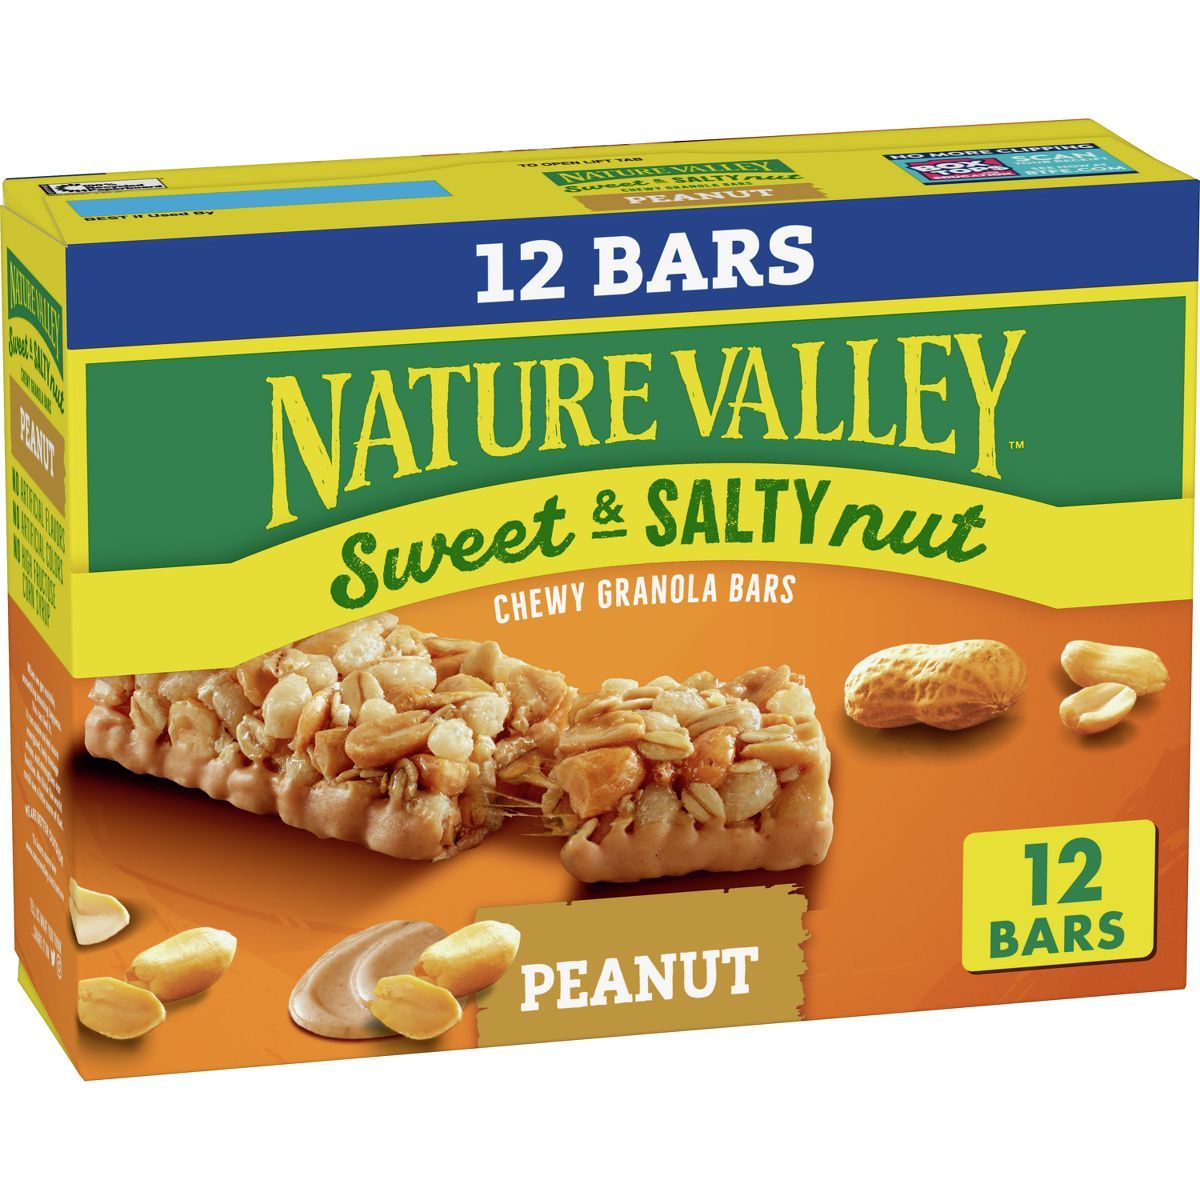 Nature Valley Sweet & Salty Nut Peanut Granola Bars - 1.2oz 12ct | Target